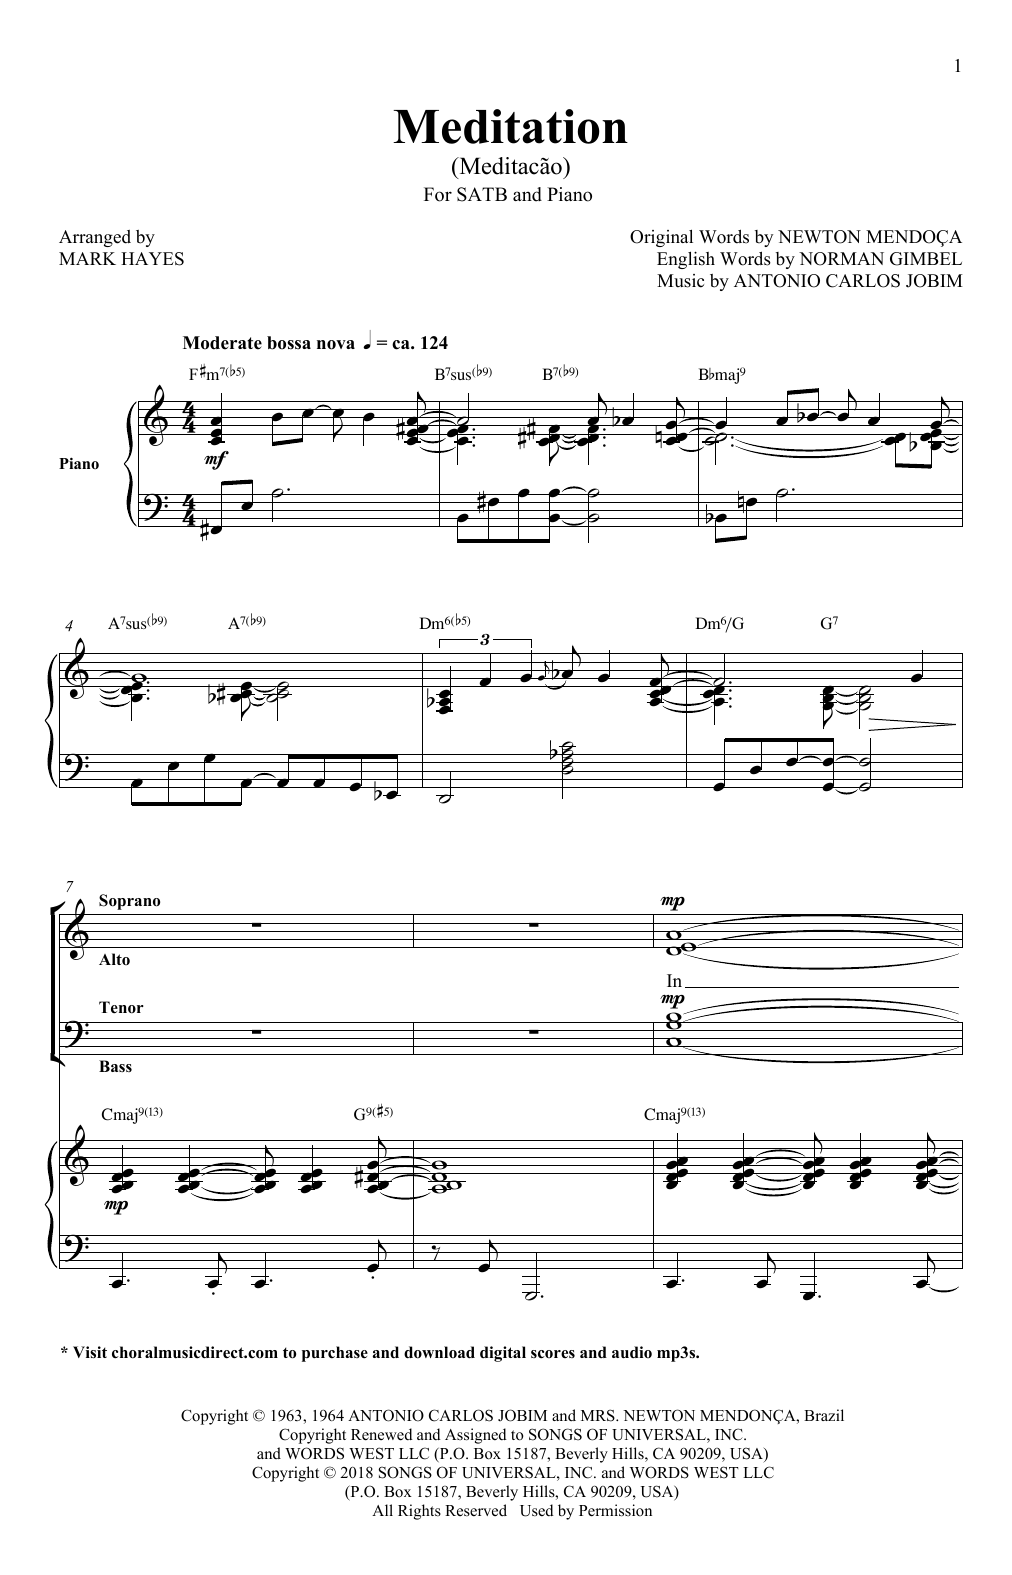 Download Antonio Carlos Jobim Meditation (Meditacao) (arr. Mark Hayes) Sheet Music and learn how to play SATB Choir PDF digital score in minutes